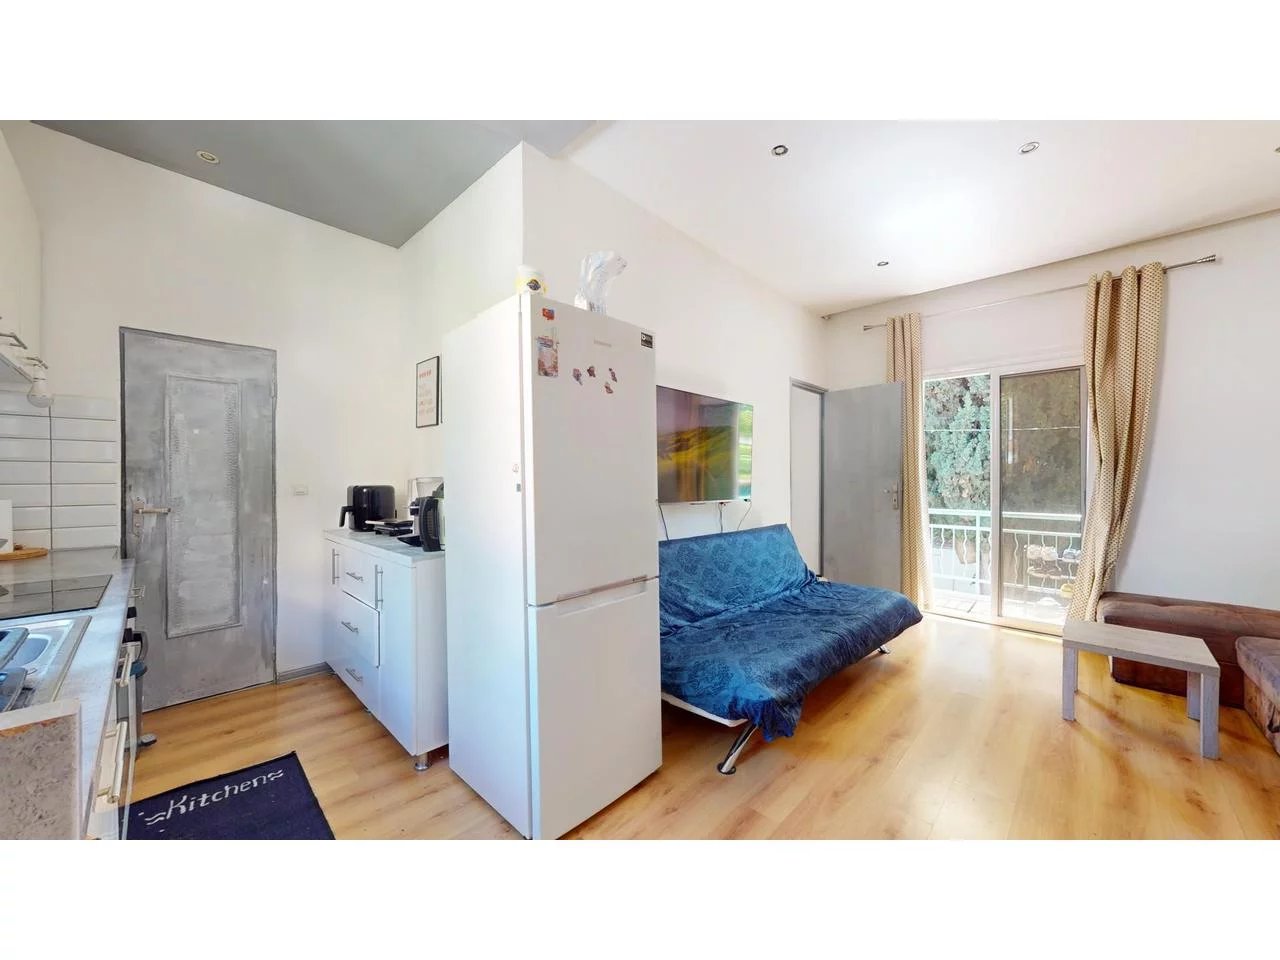 Appartement  2 Locali 32m2  In vendita   231 000 €